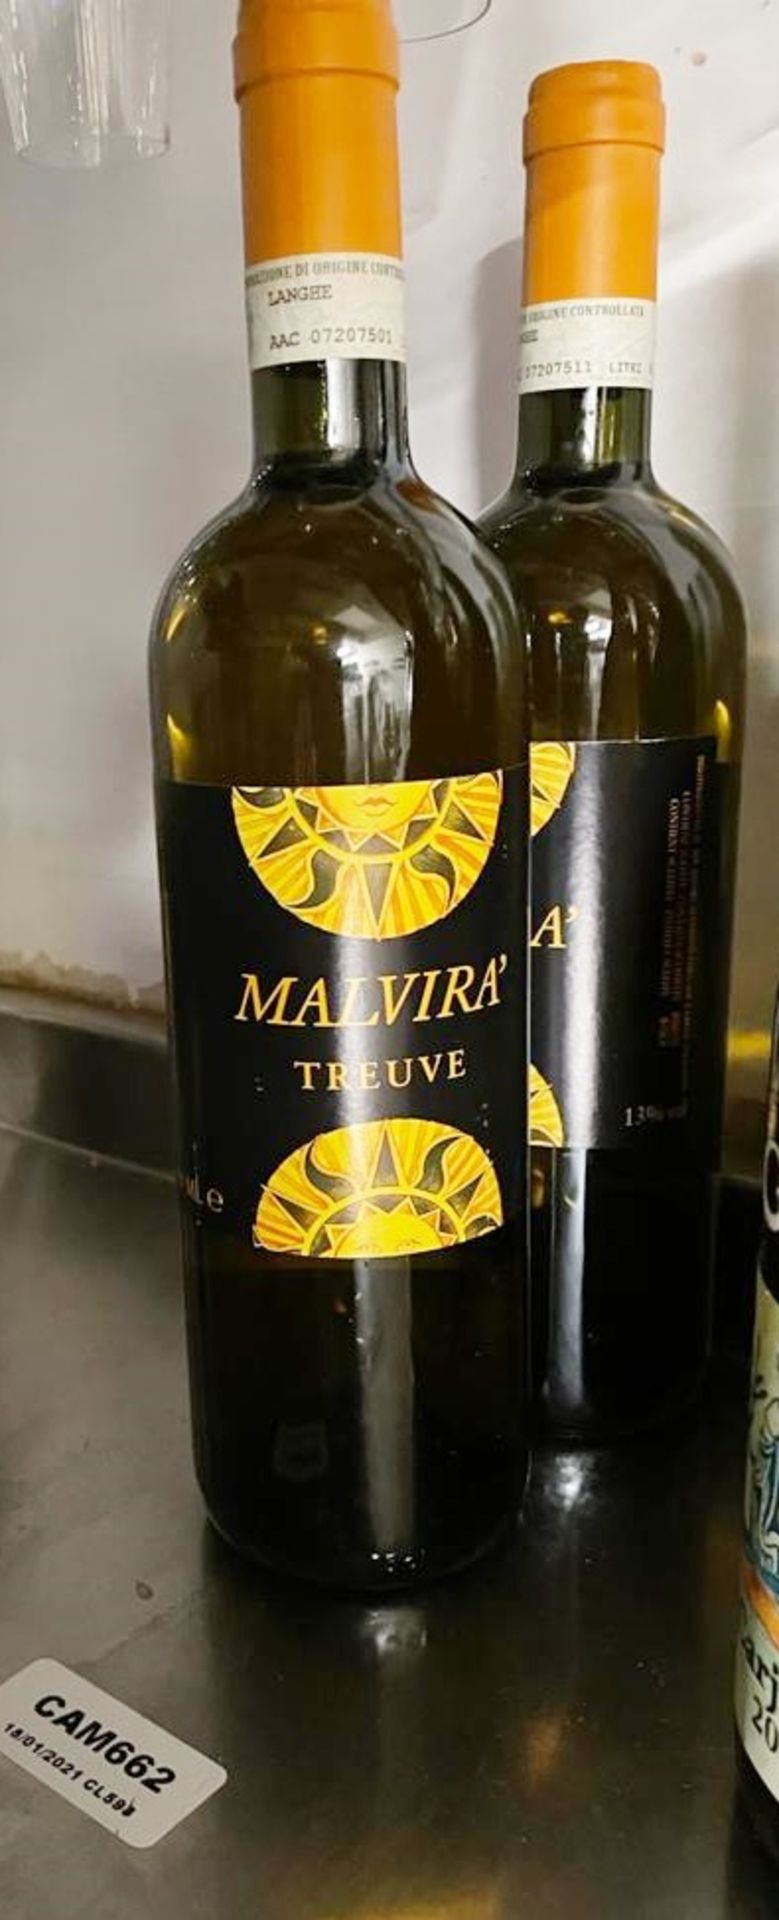 2 x Bottles Of MALVIRA TRUEVE - 2010 - 750ml - New/Unopened Restaurant Stock - Ref: CAM662 - Image 3 of 3